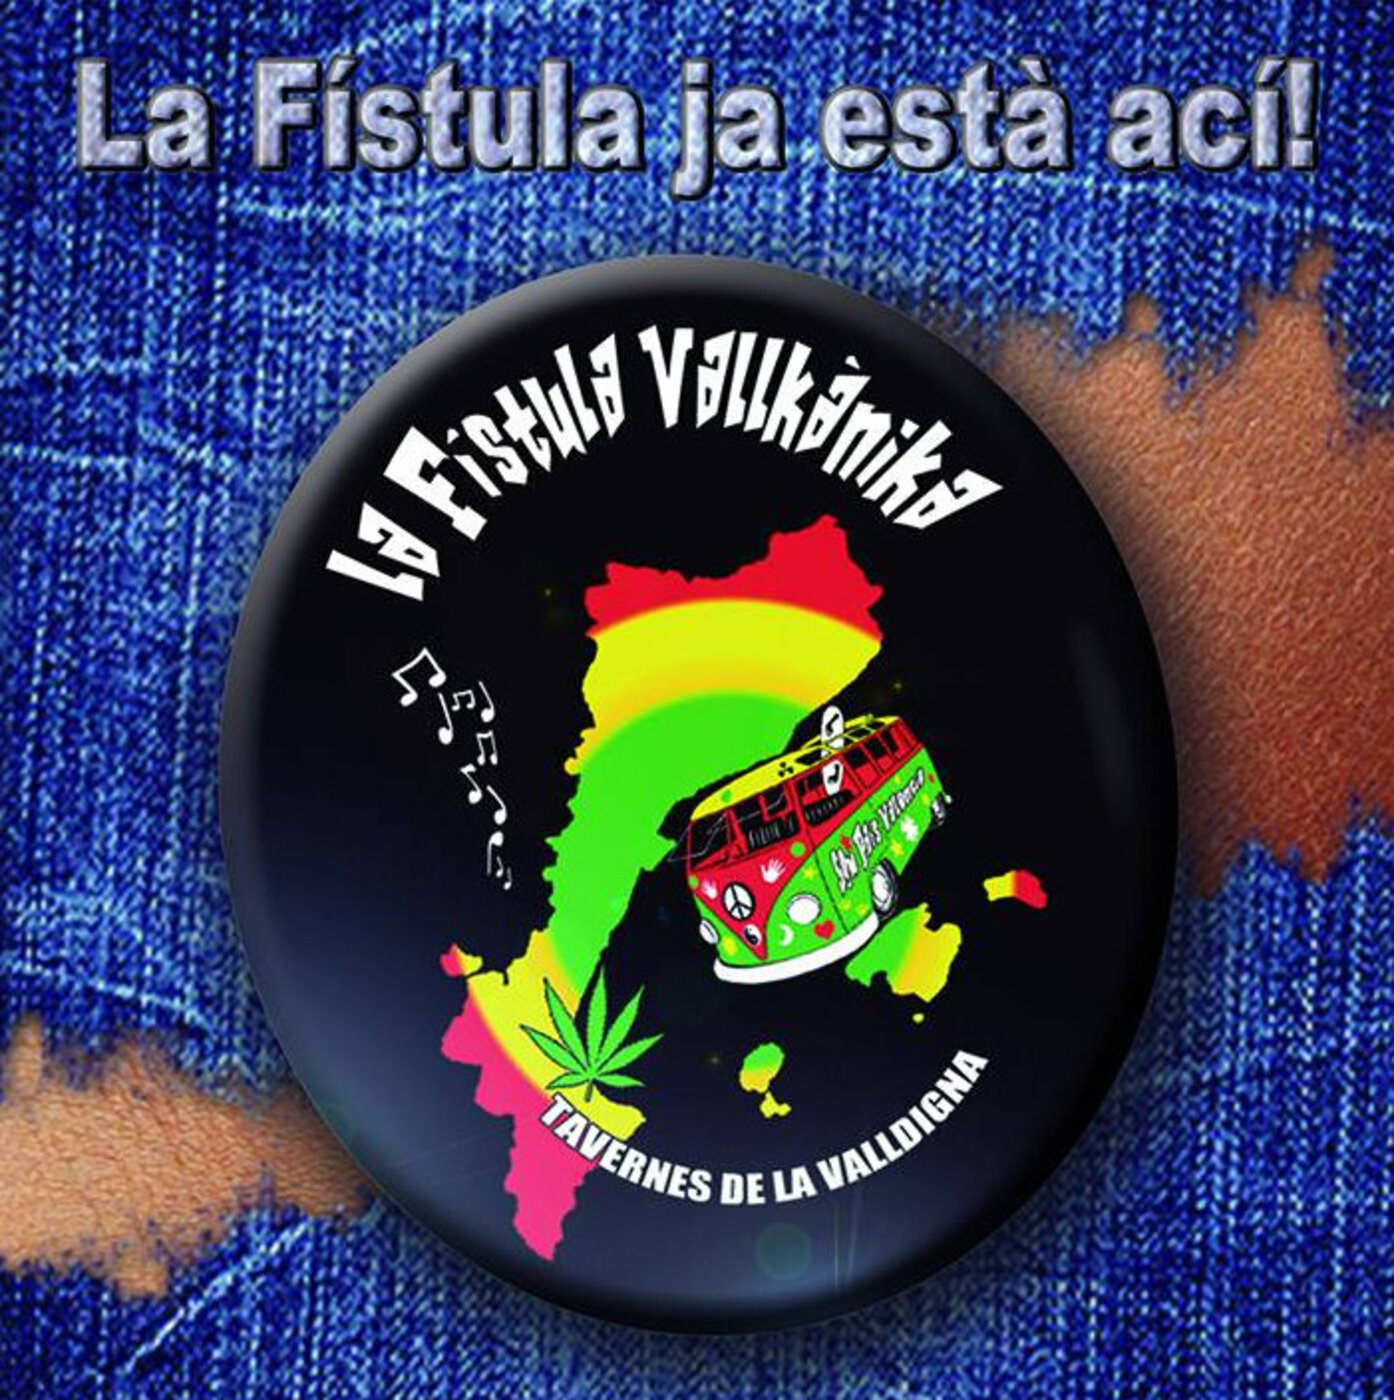 La Fístula Vallkànika - La Fístula ja està ací | musica en valencià